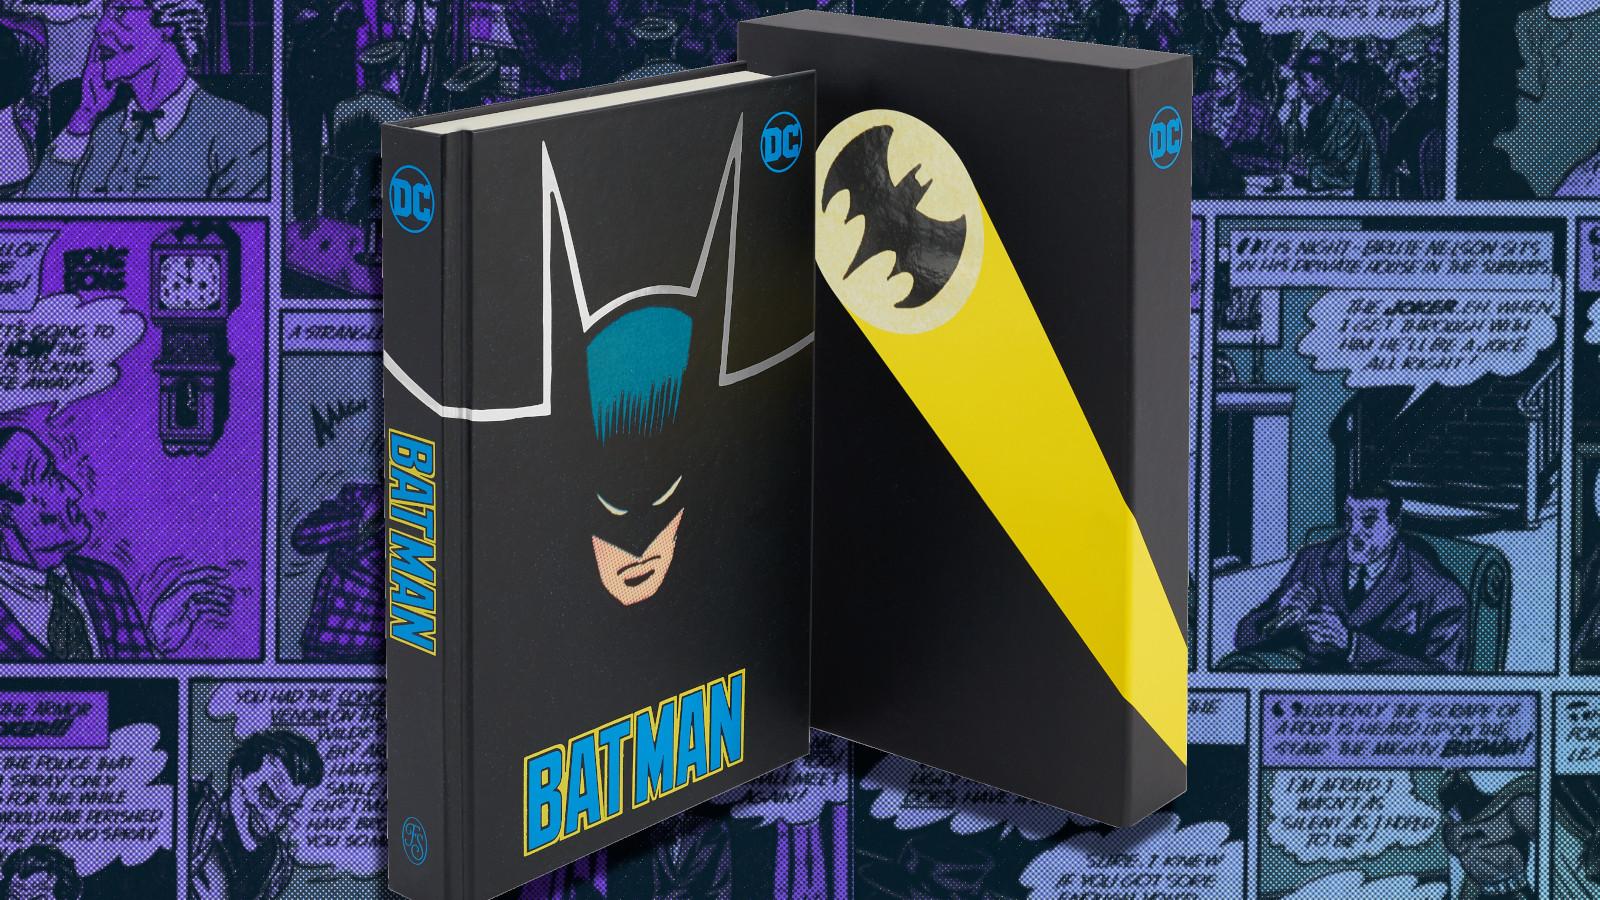 Folio Society's DC: Batman collection